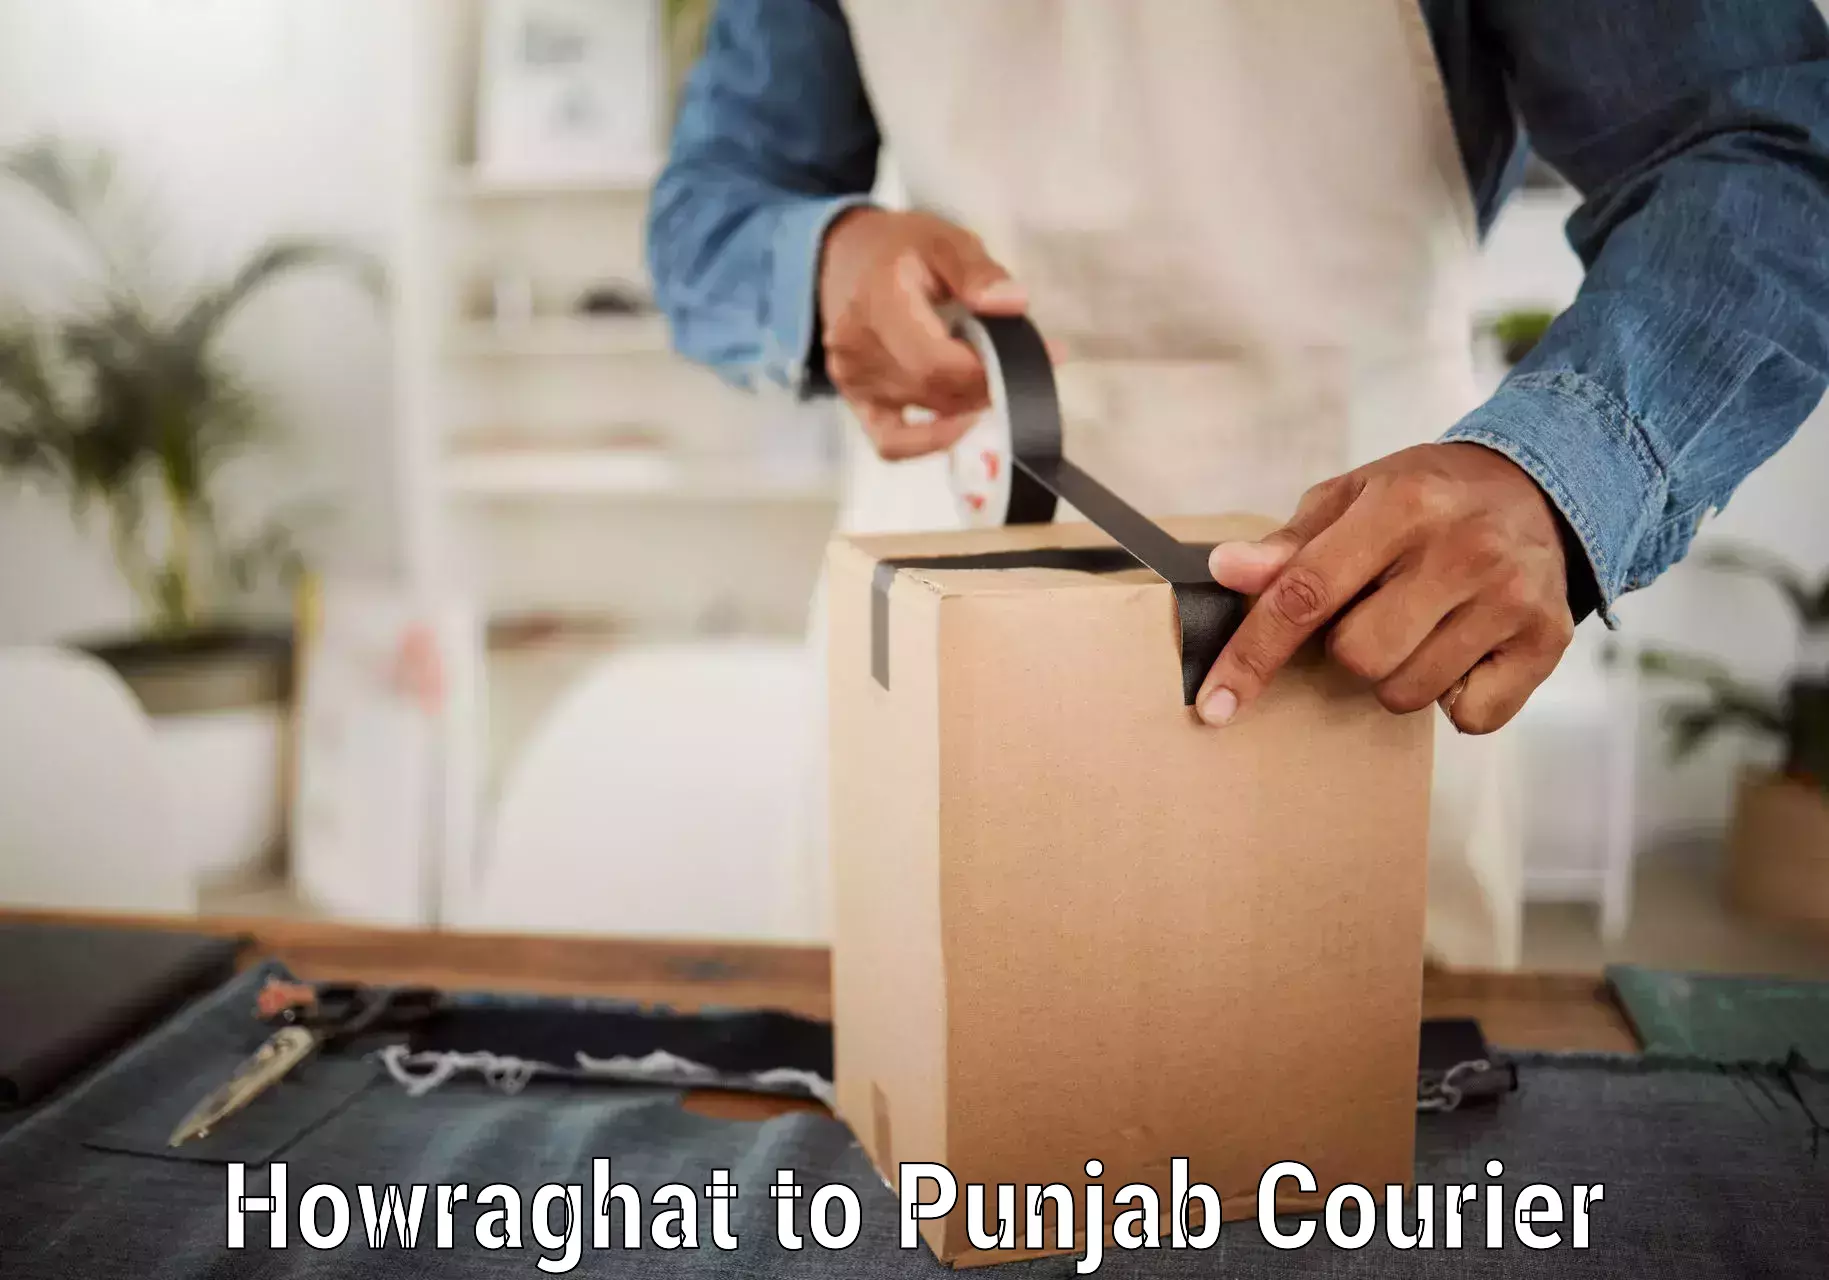 Courier tracking online Howraghat to Jalandhar